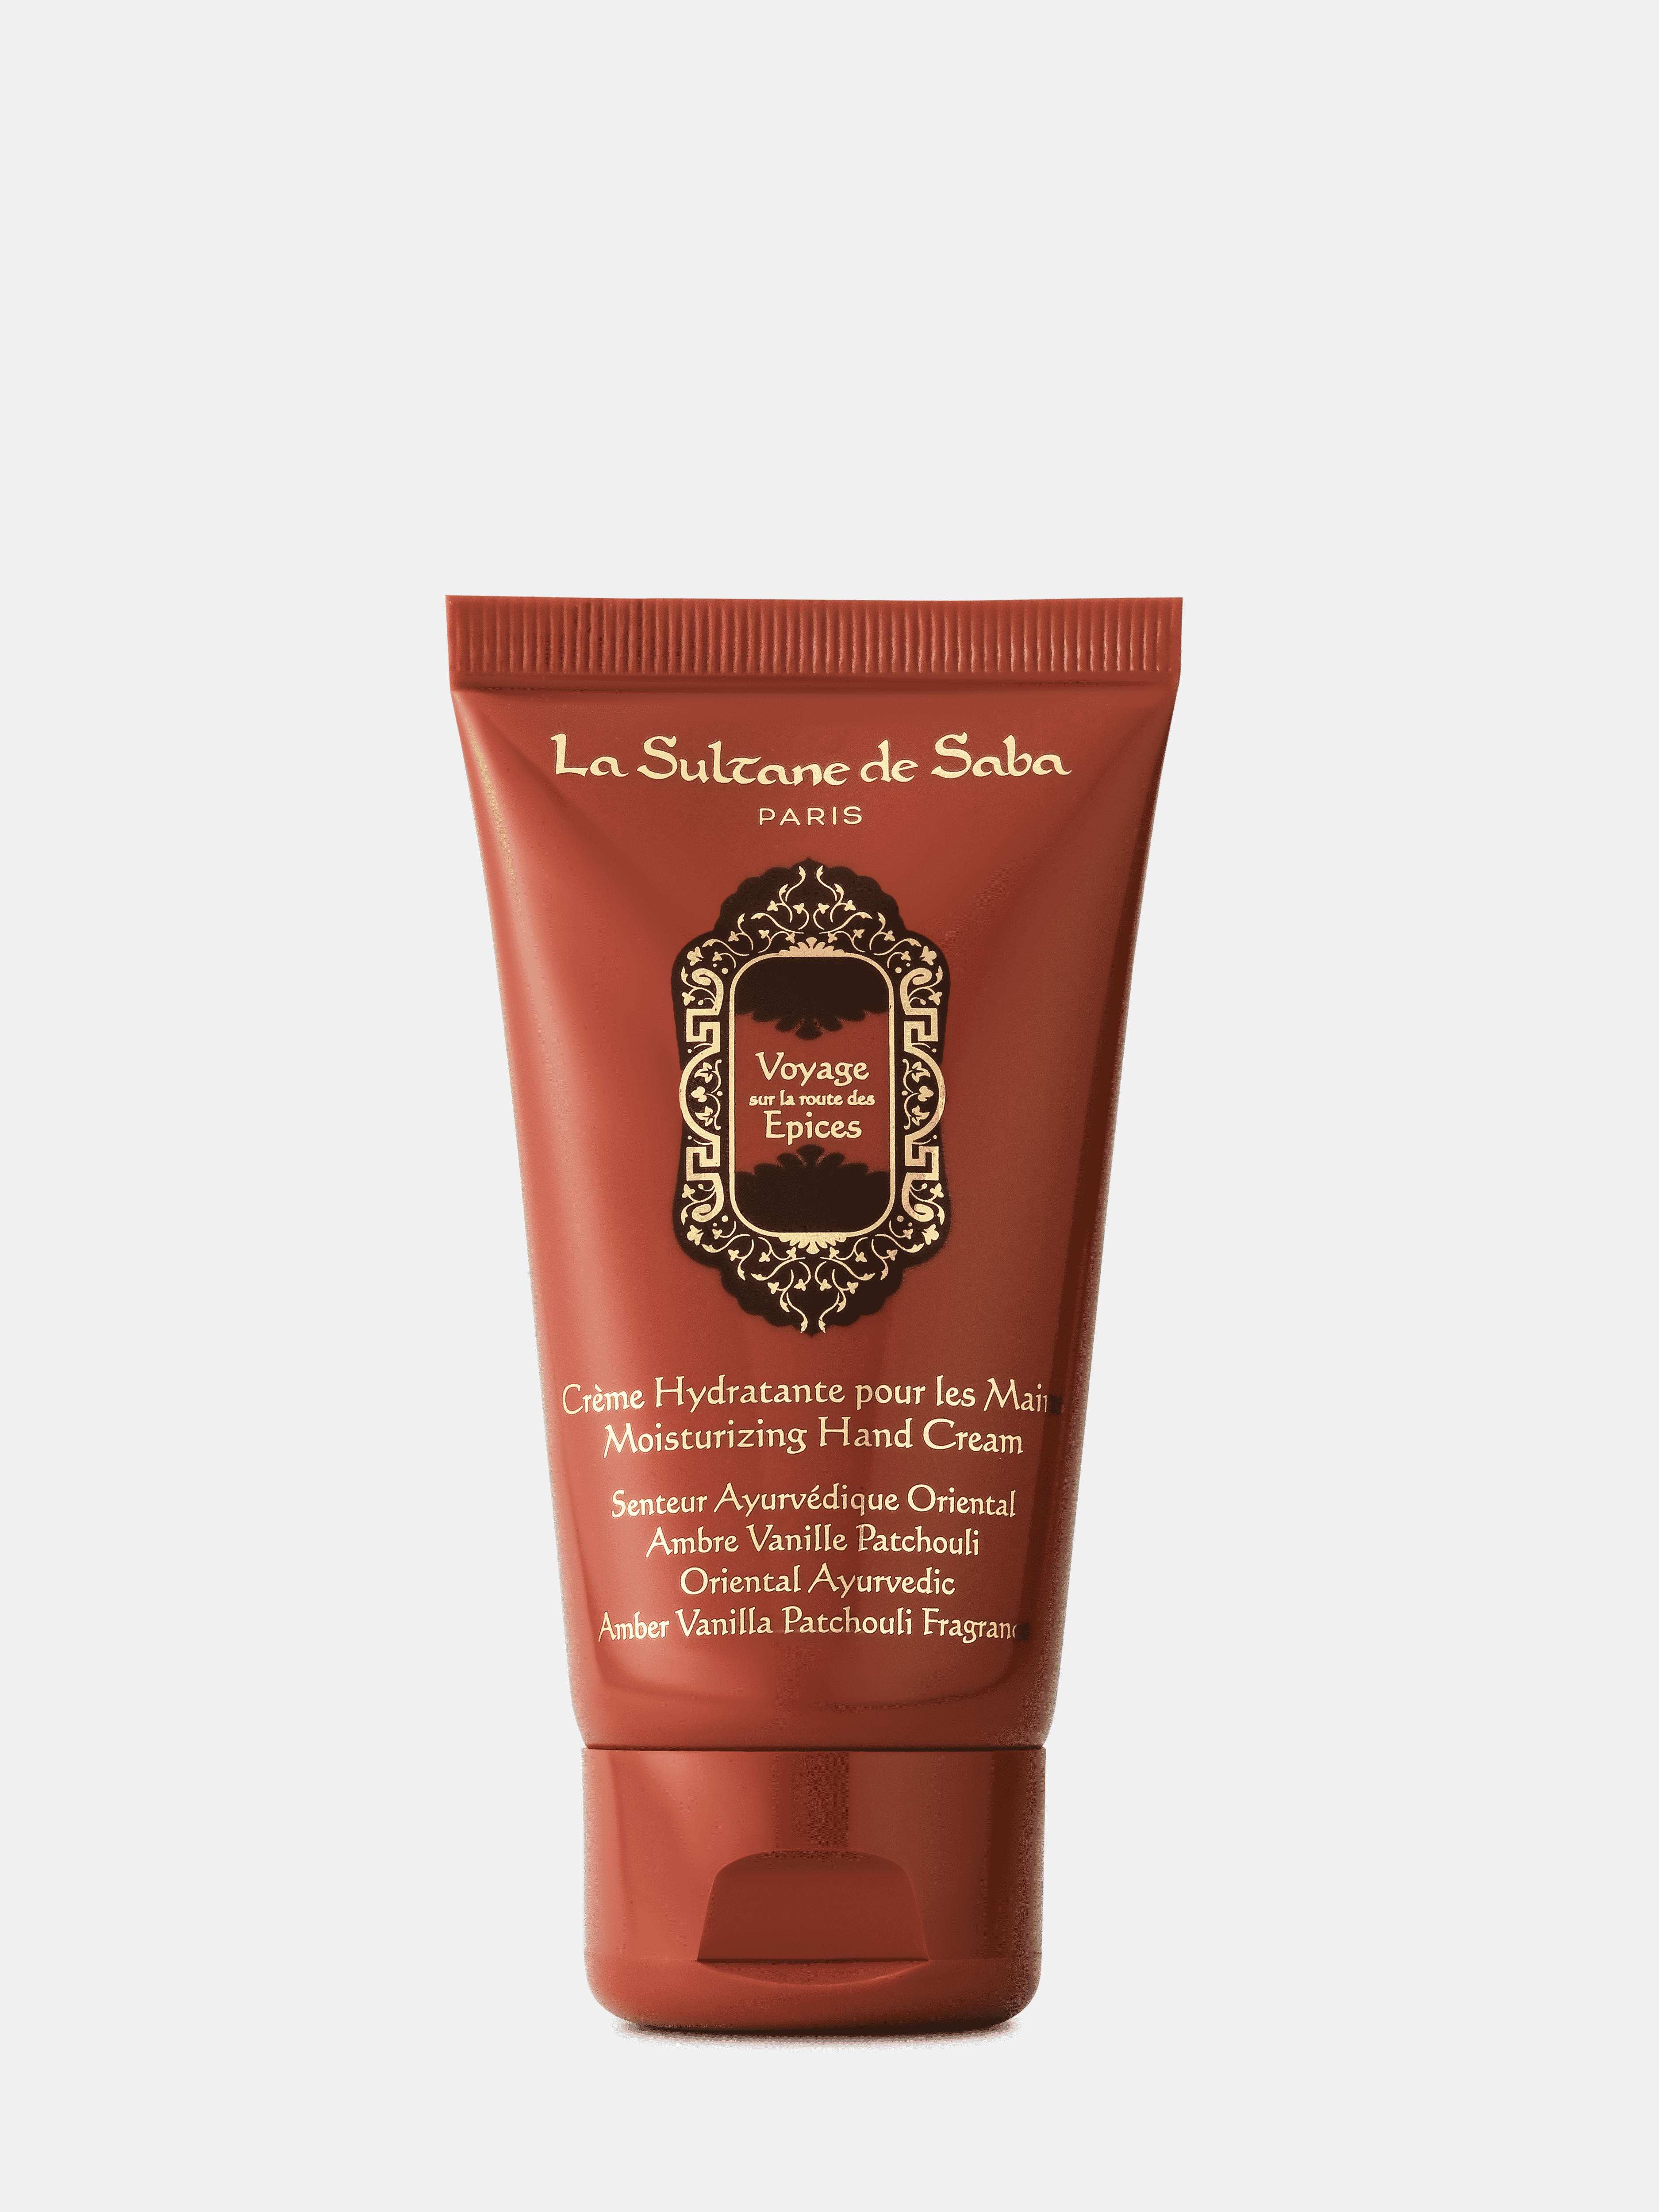 La Sultane de Saba Hand Cream in Oriental Ayurvedic Amber Vanilla Patchouli